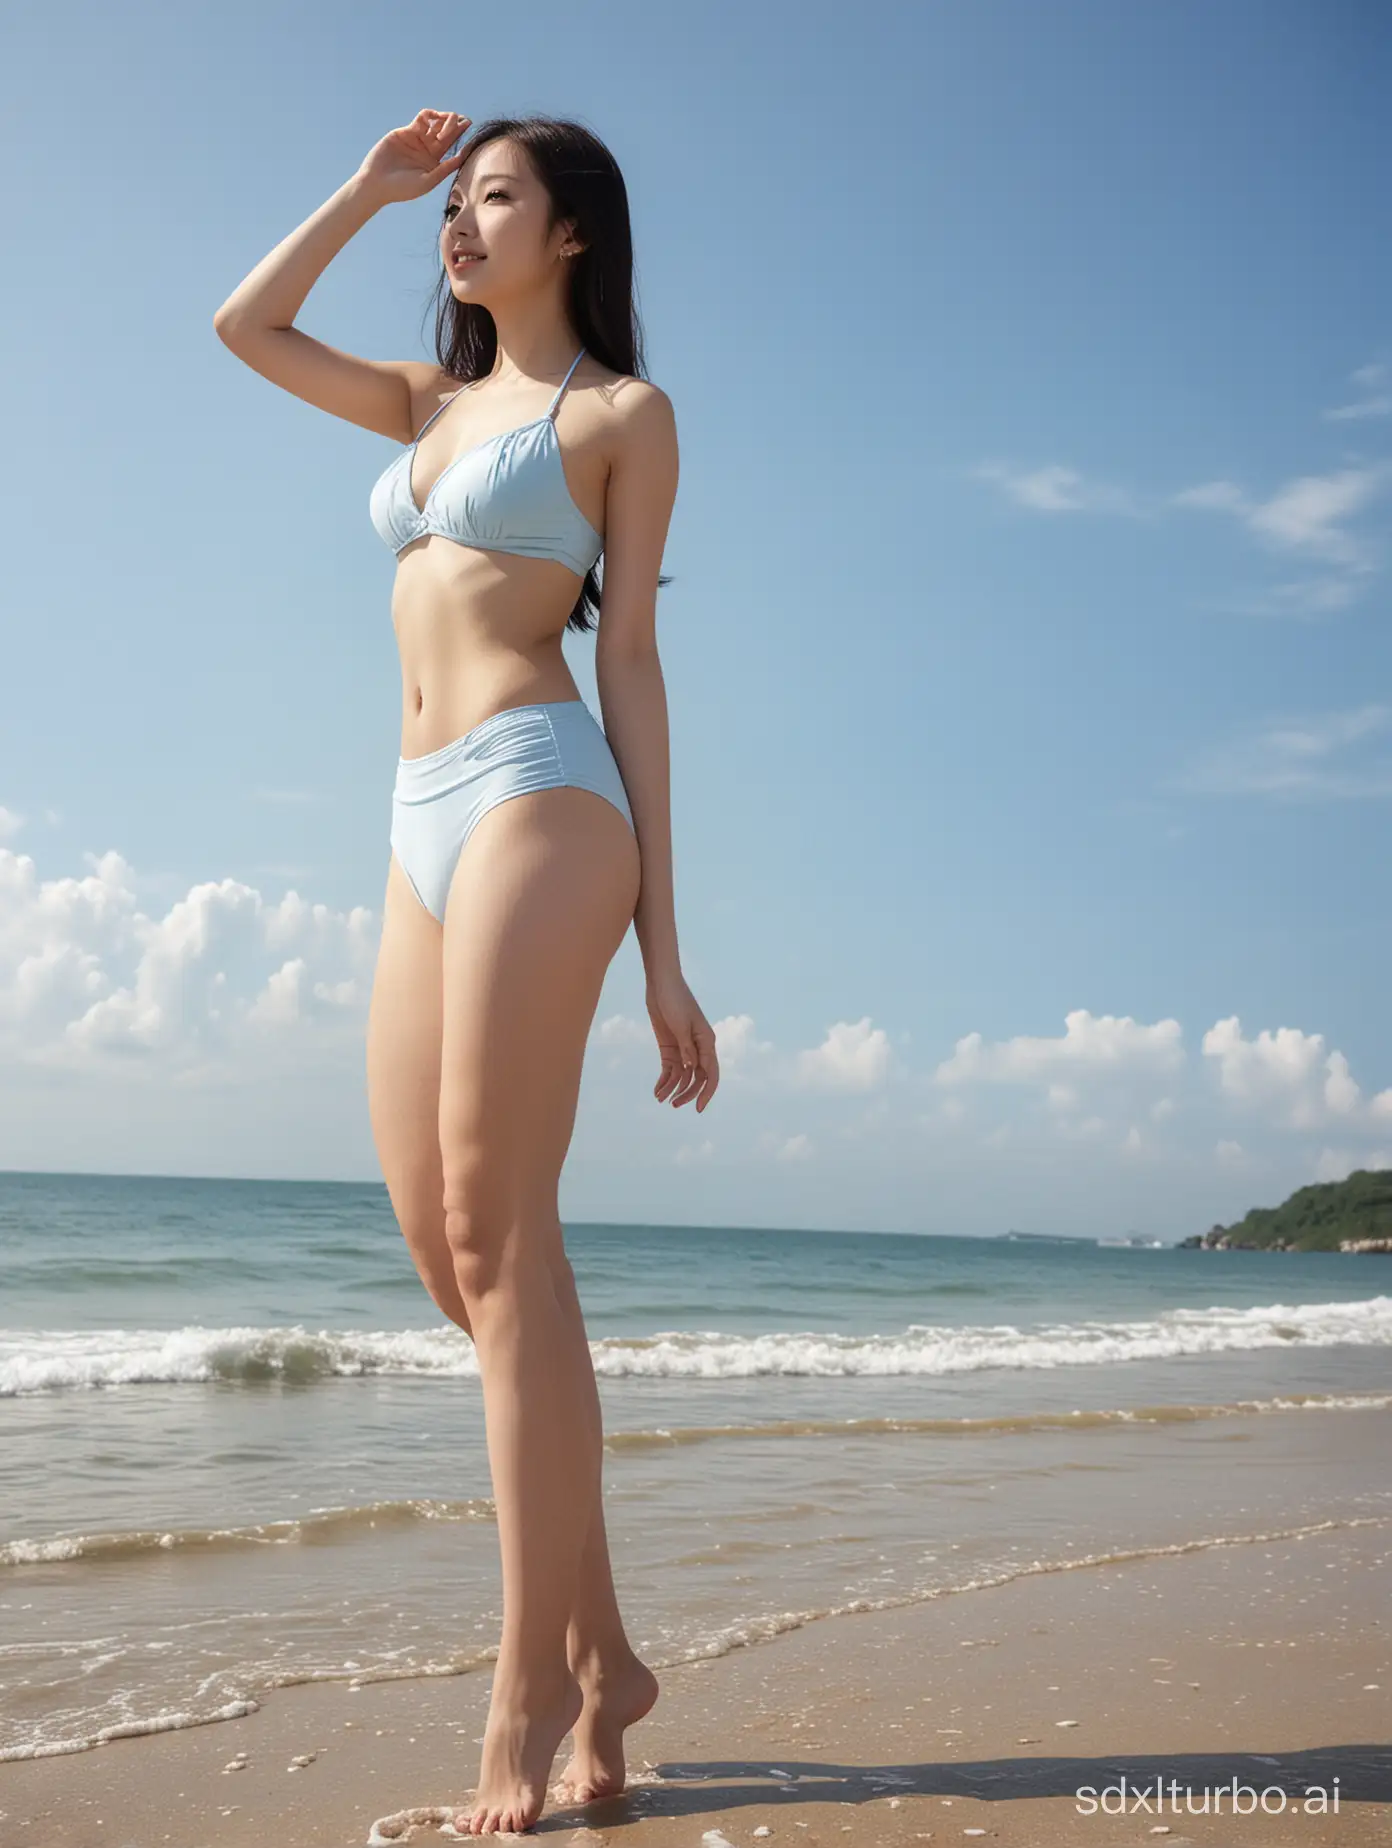 At the age of 18, Yi Nengjing, bikini, can be seen from head to toe, seaside, sunshine, blue sky, white clouds, one-legged stance